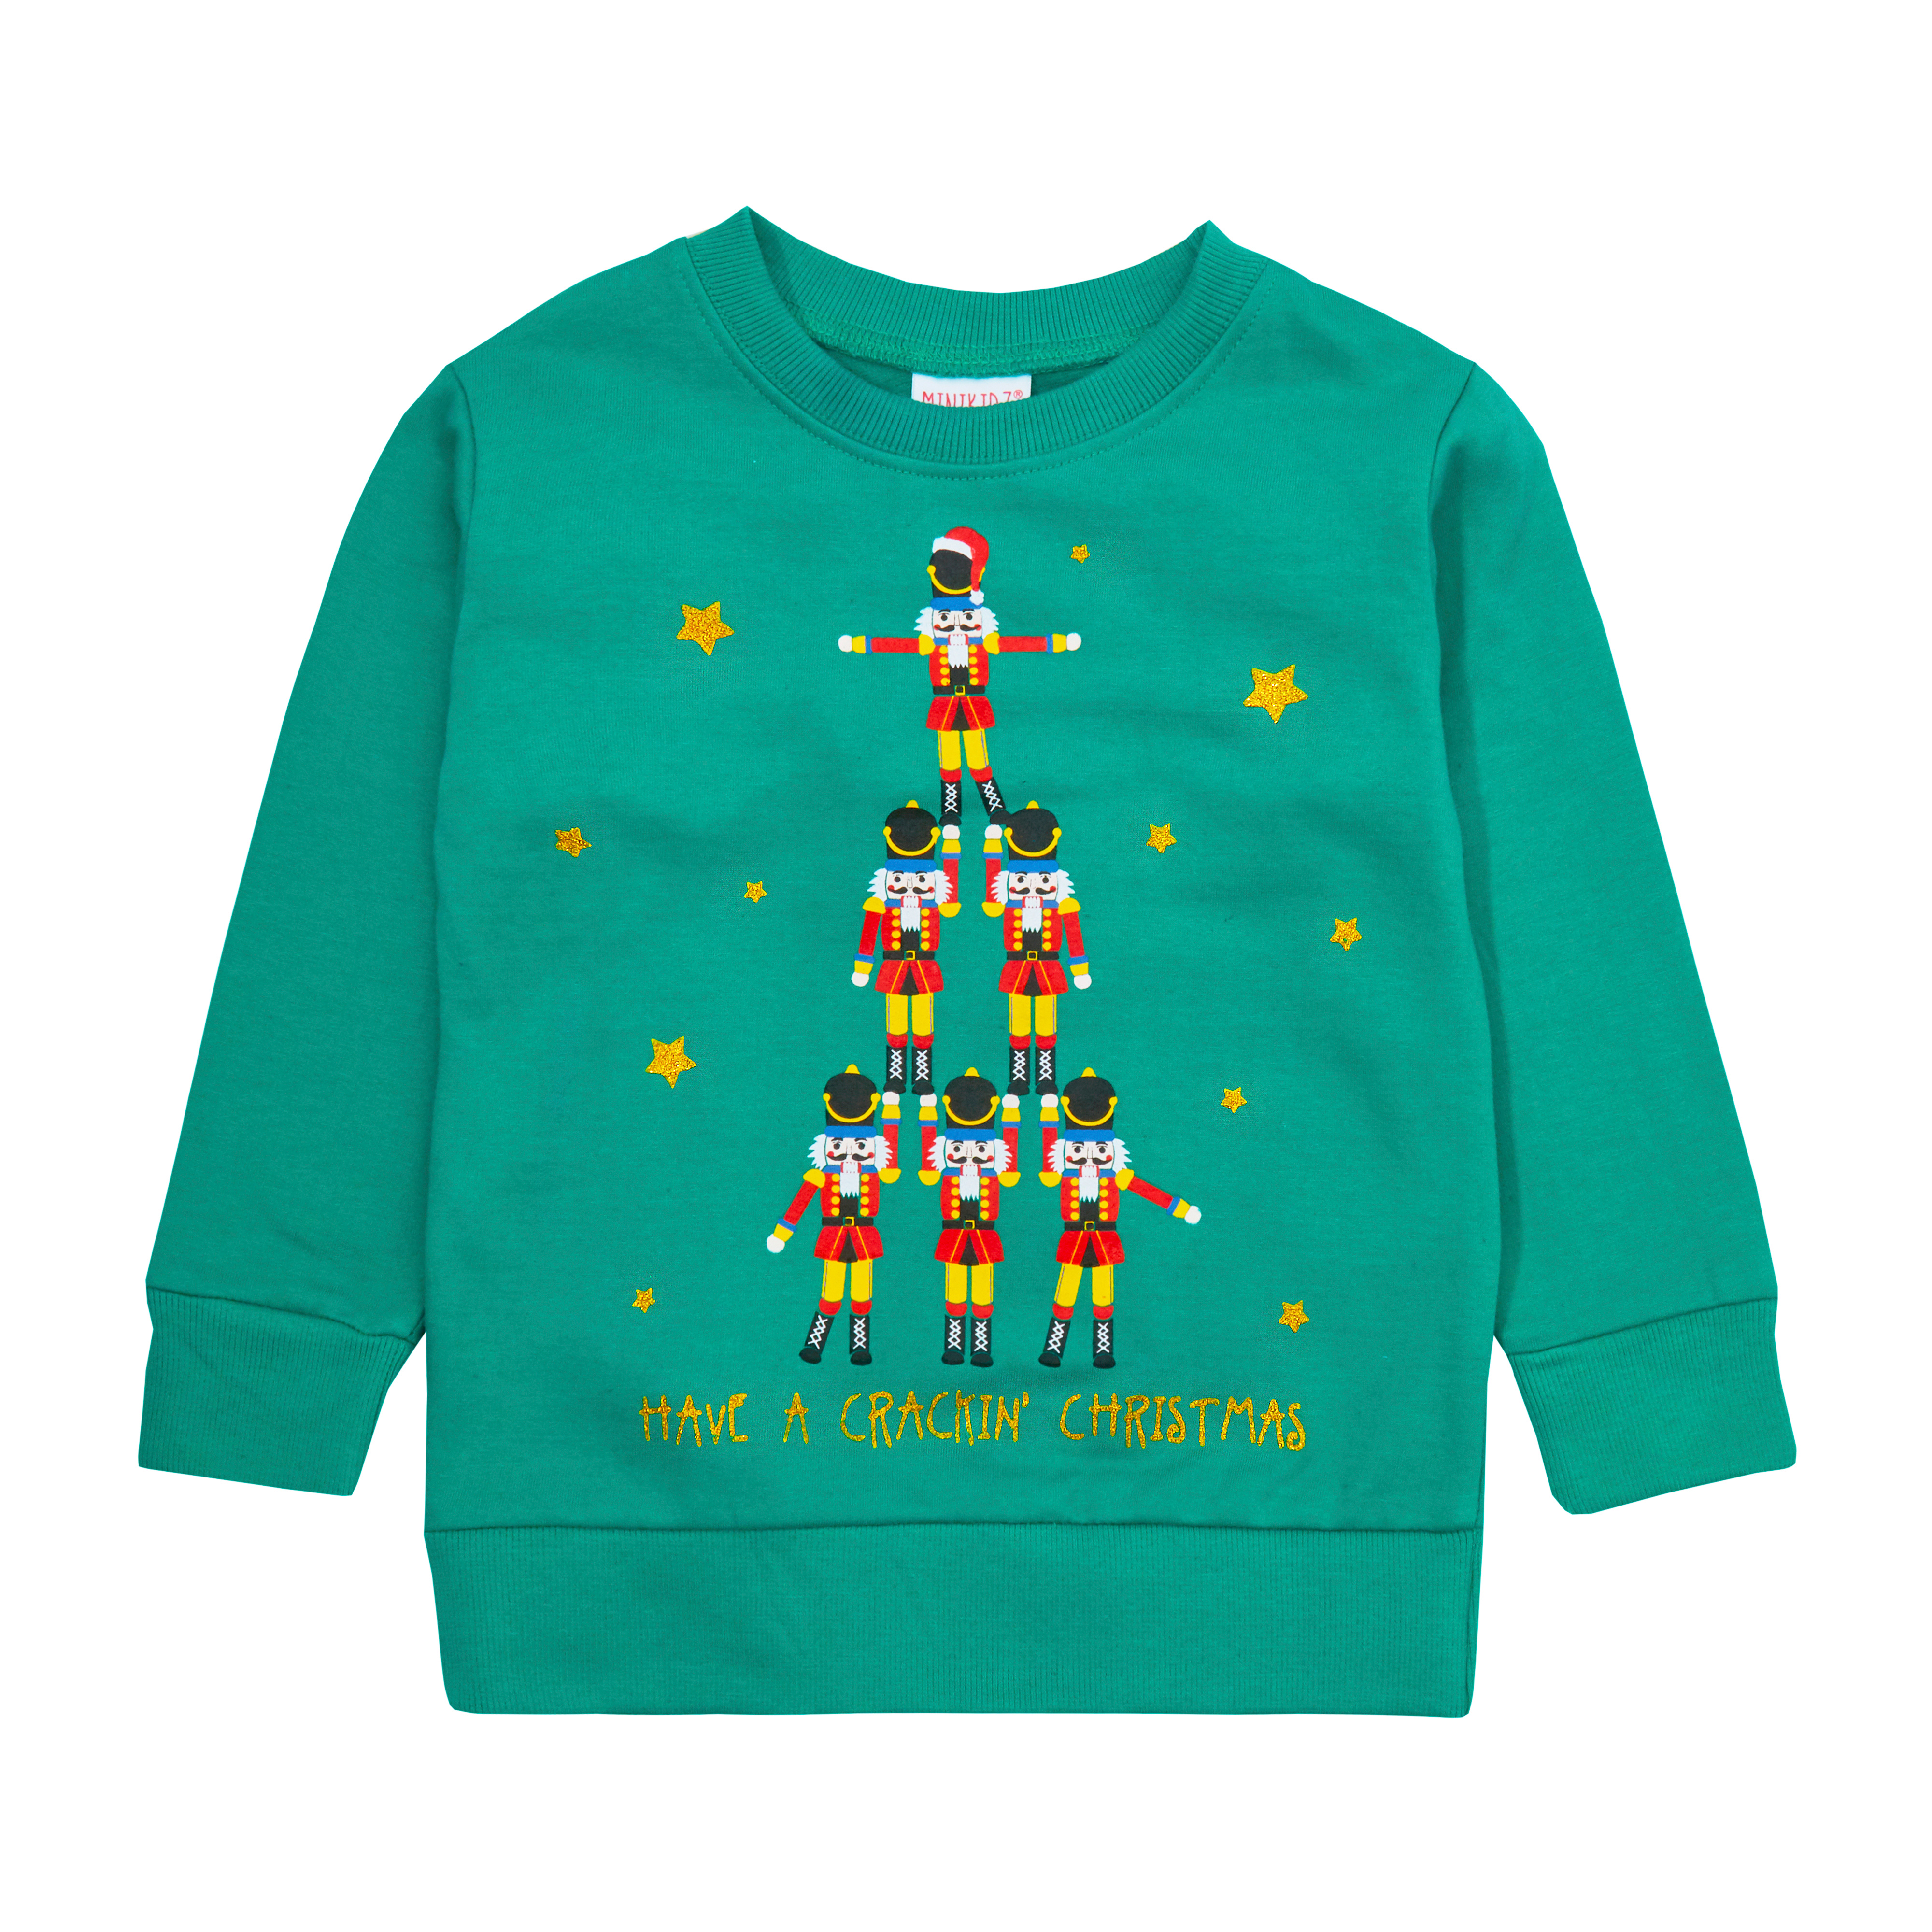 Kids Novelty Merry Christmas Jumper Unisex Girls Boys Home Alone Unisex Sweater 